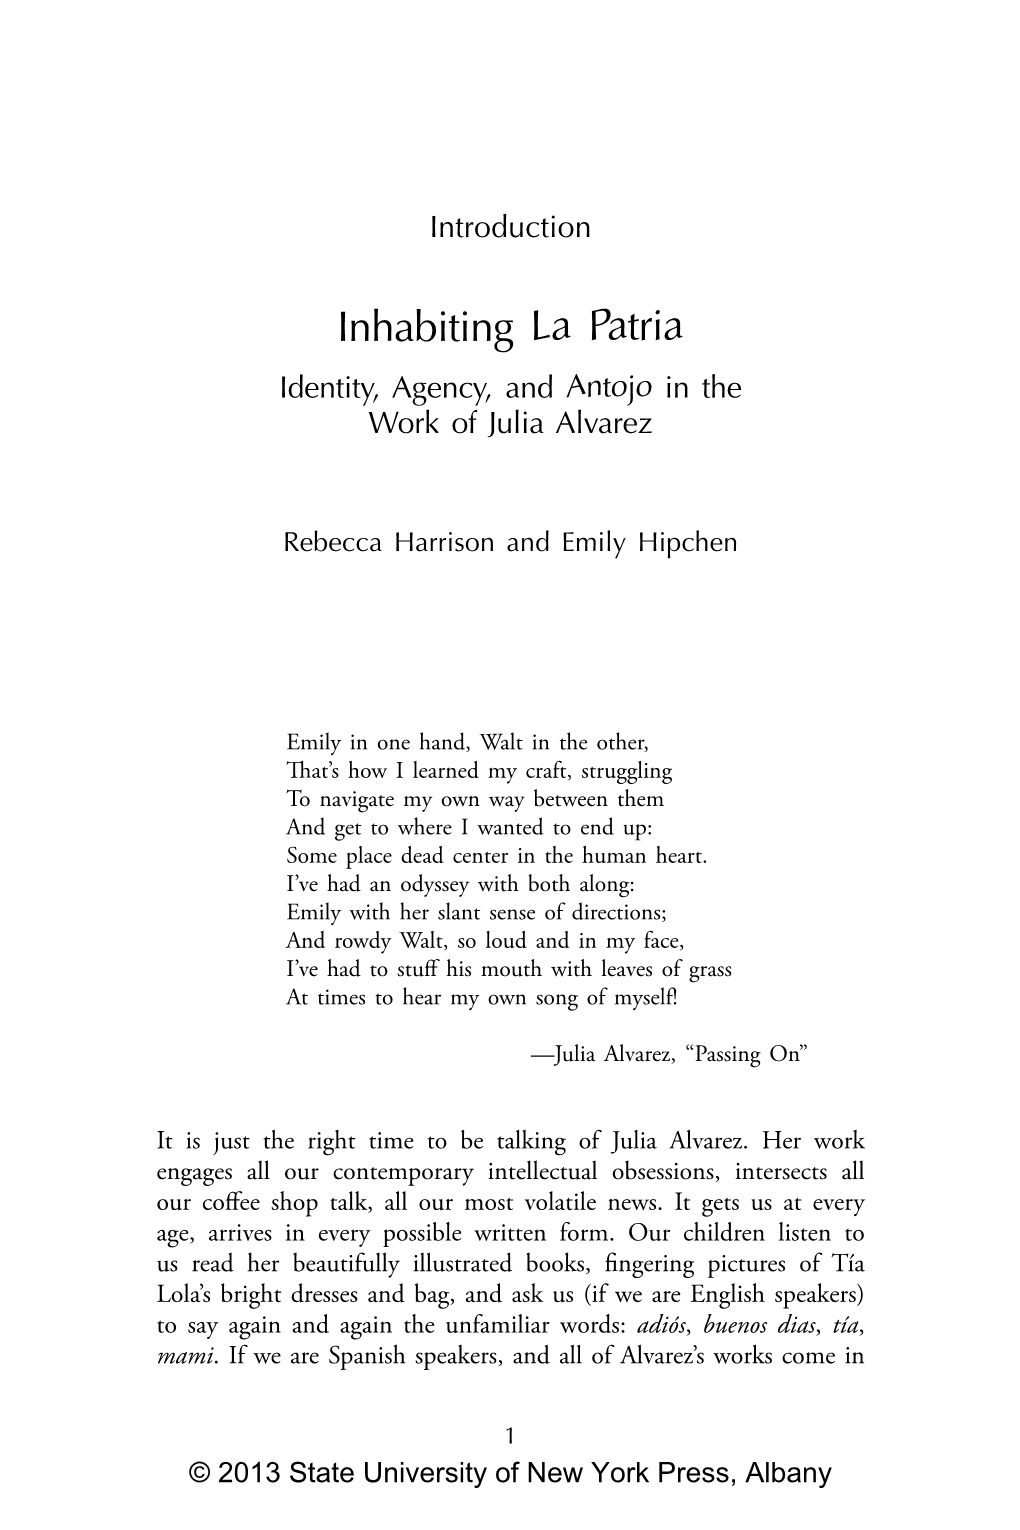 Inhabiting La Patria Identity, Agency, and Antojo in the Work of Julia Alvarez